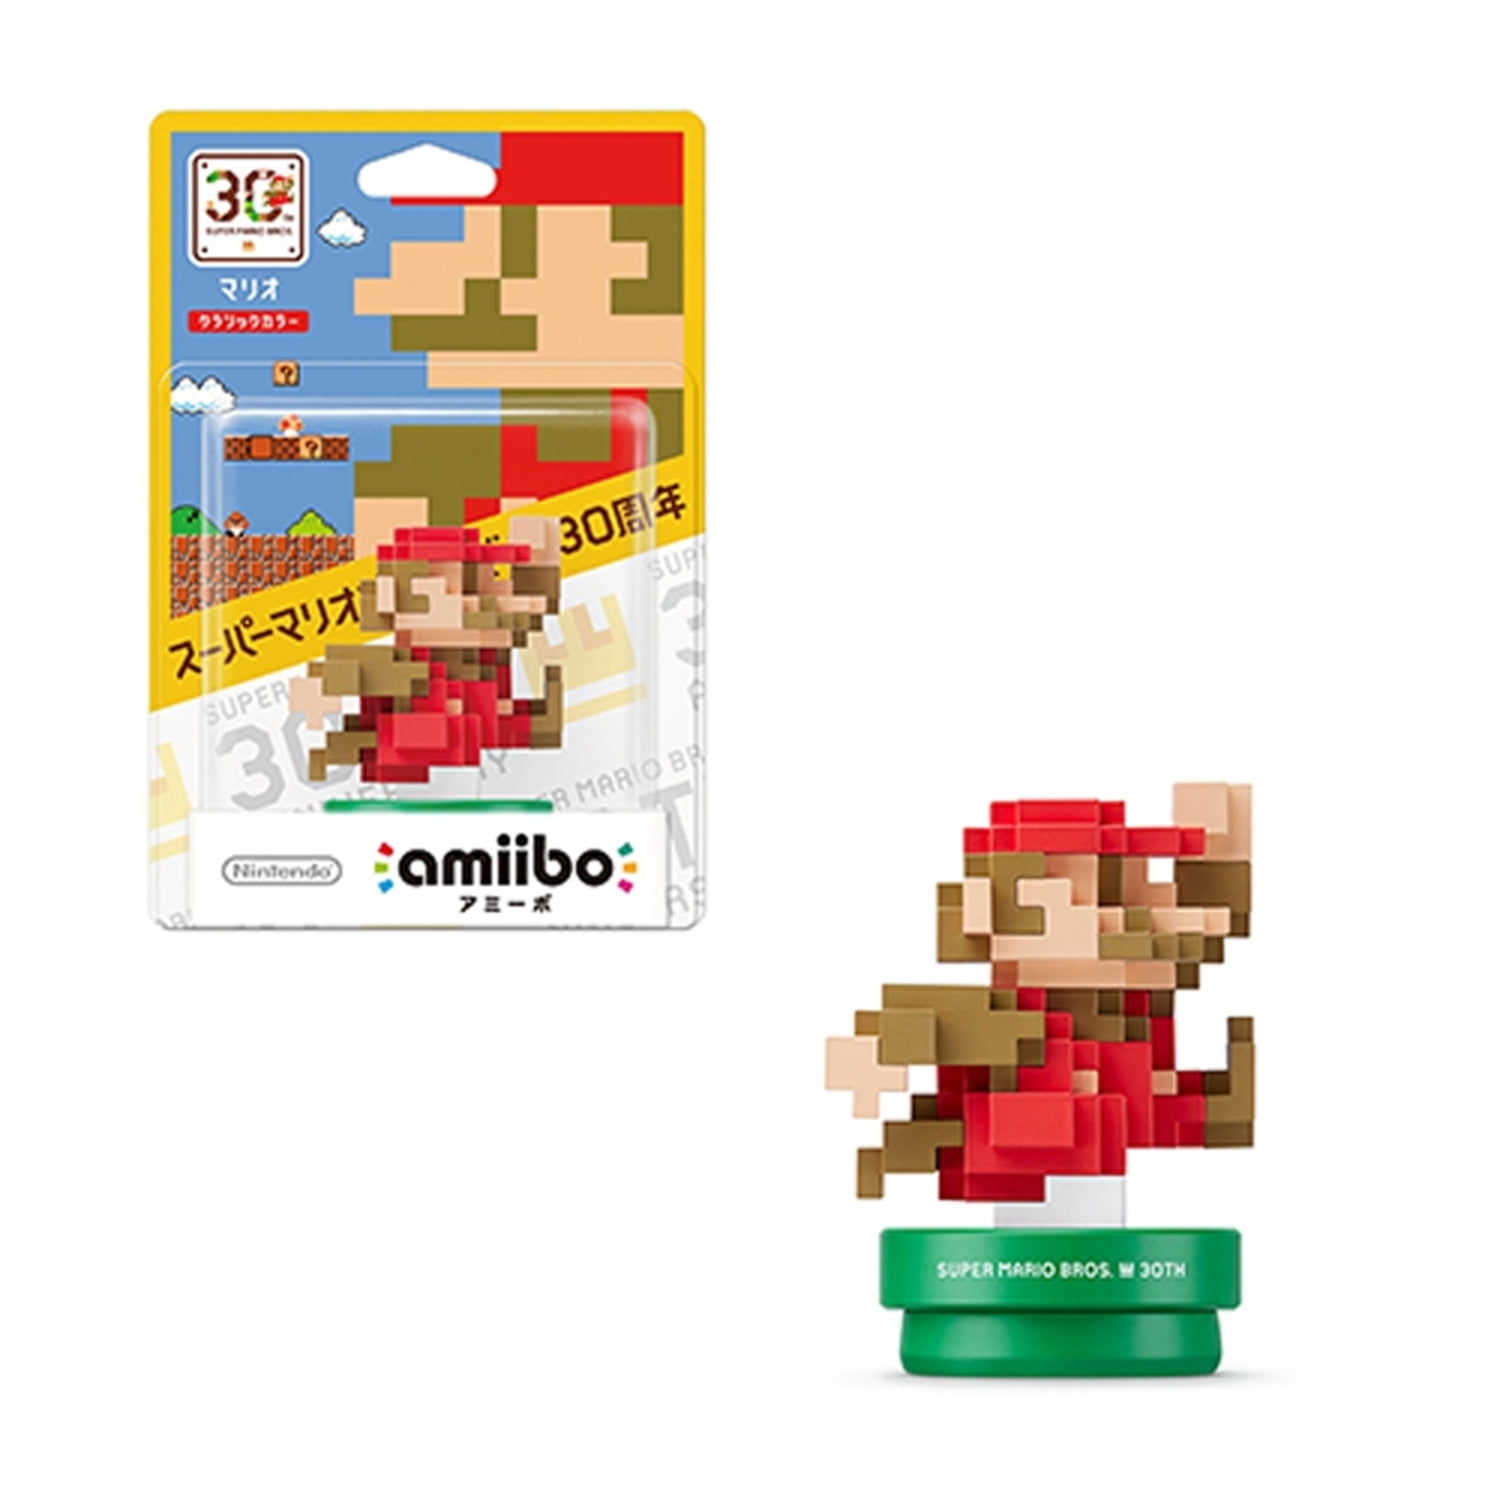 Nintendo Wii U / - Software - Amiibo - Action Figure - Mario 30th Anniversary - 8bit Classic Color Mario (Gift Idea) - Walmart.com